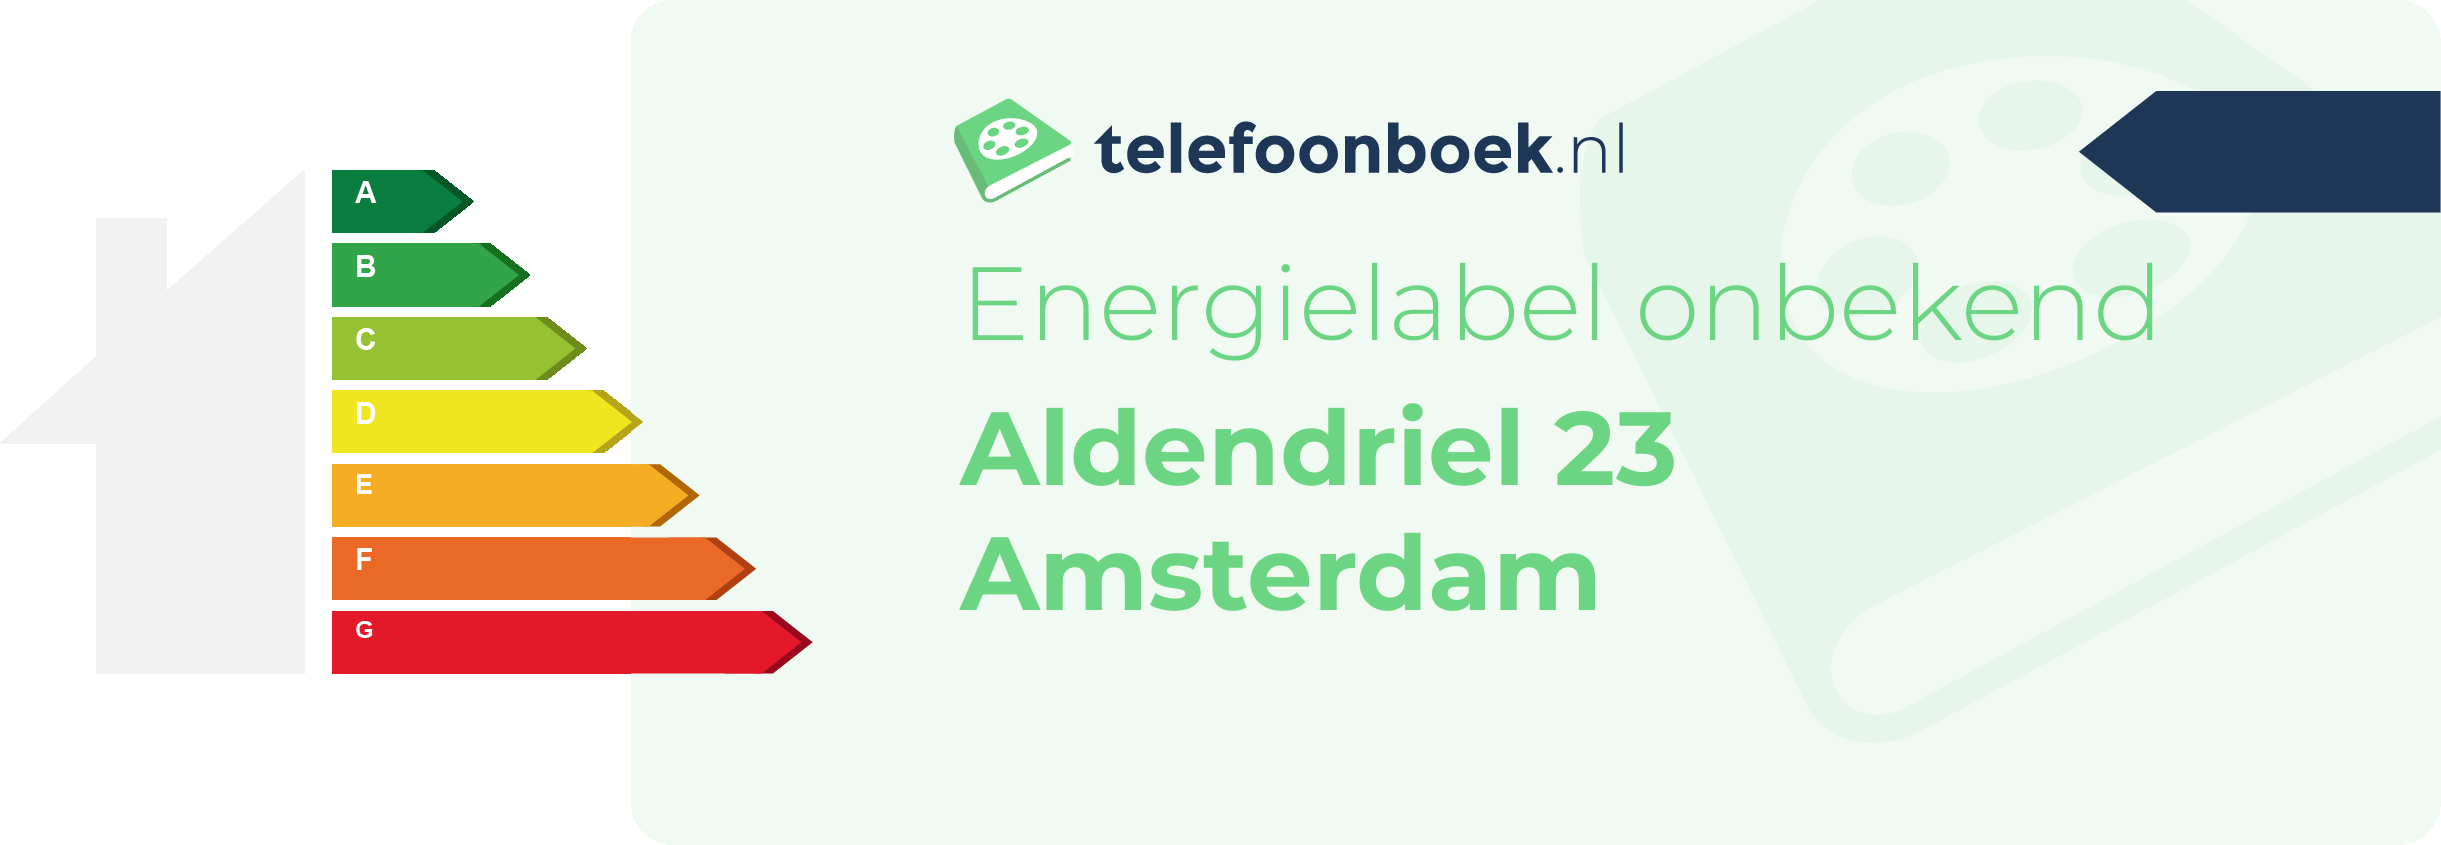 Energielabel Aldendriel 23 Amsterdam